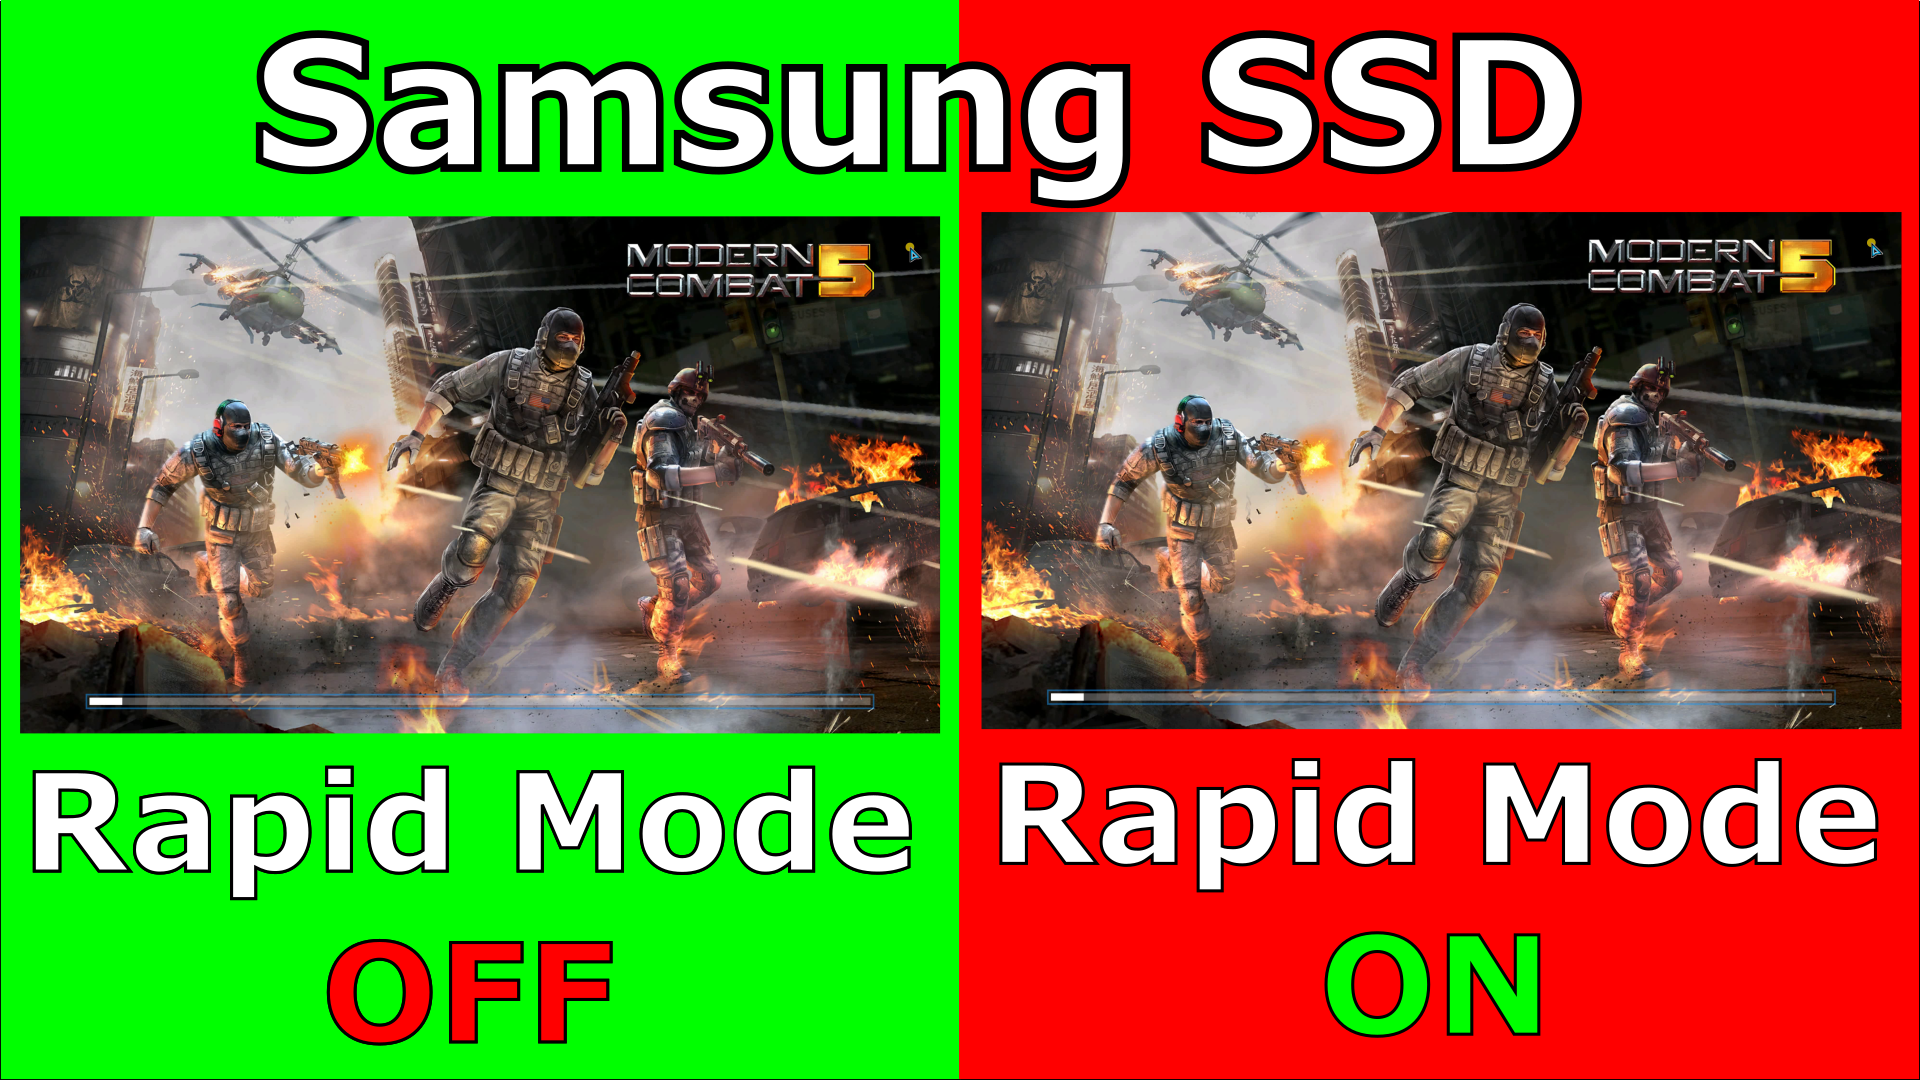 Samsung SSD Rapid Mode On vs Rapid Mode Off